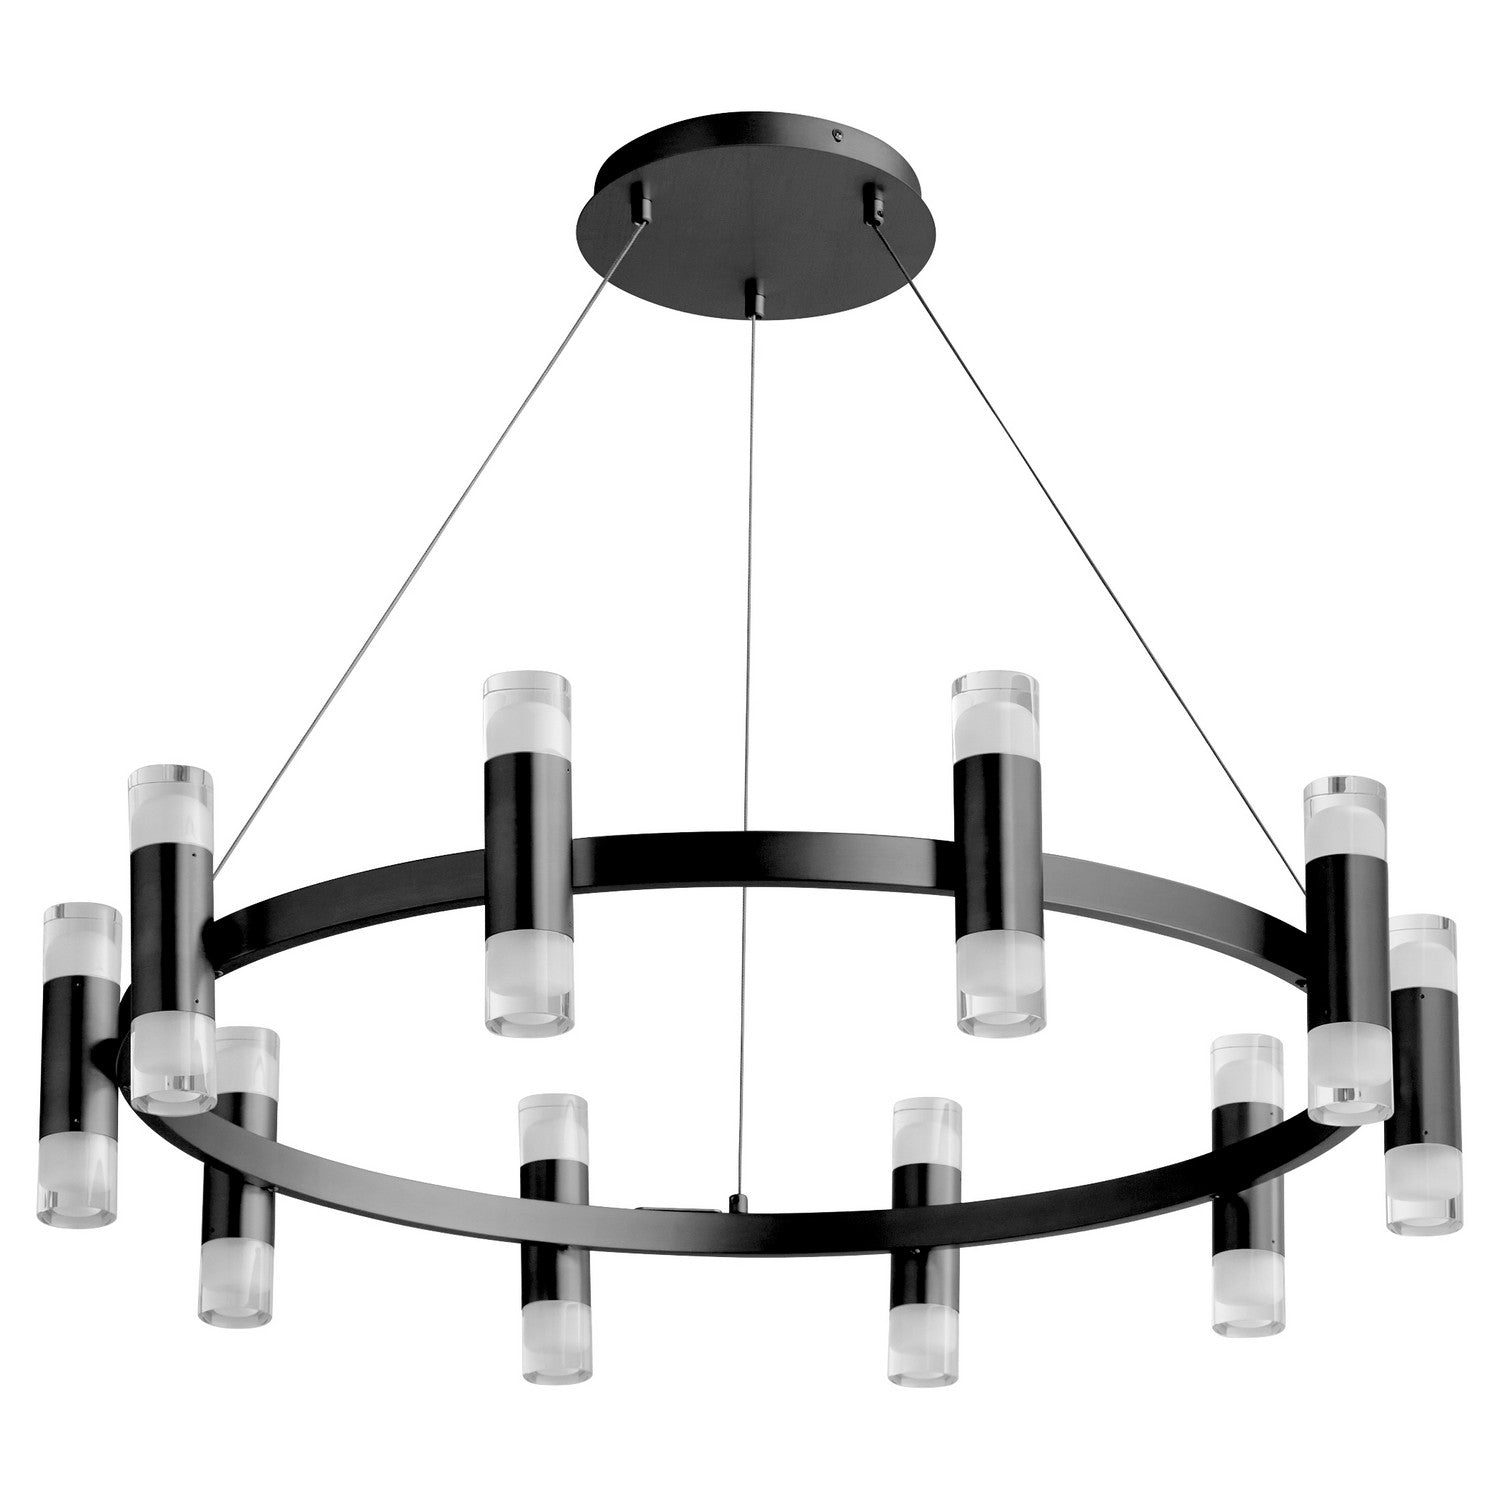 Oxygen ALARUM 3-6095-15 Modern Ring LED Chandelier Light Fixture - Black